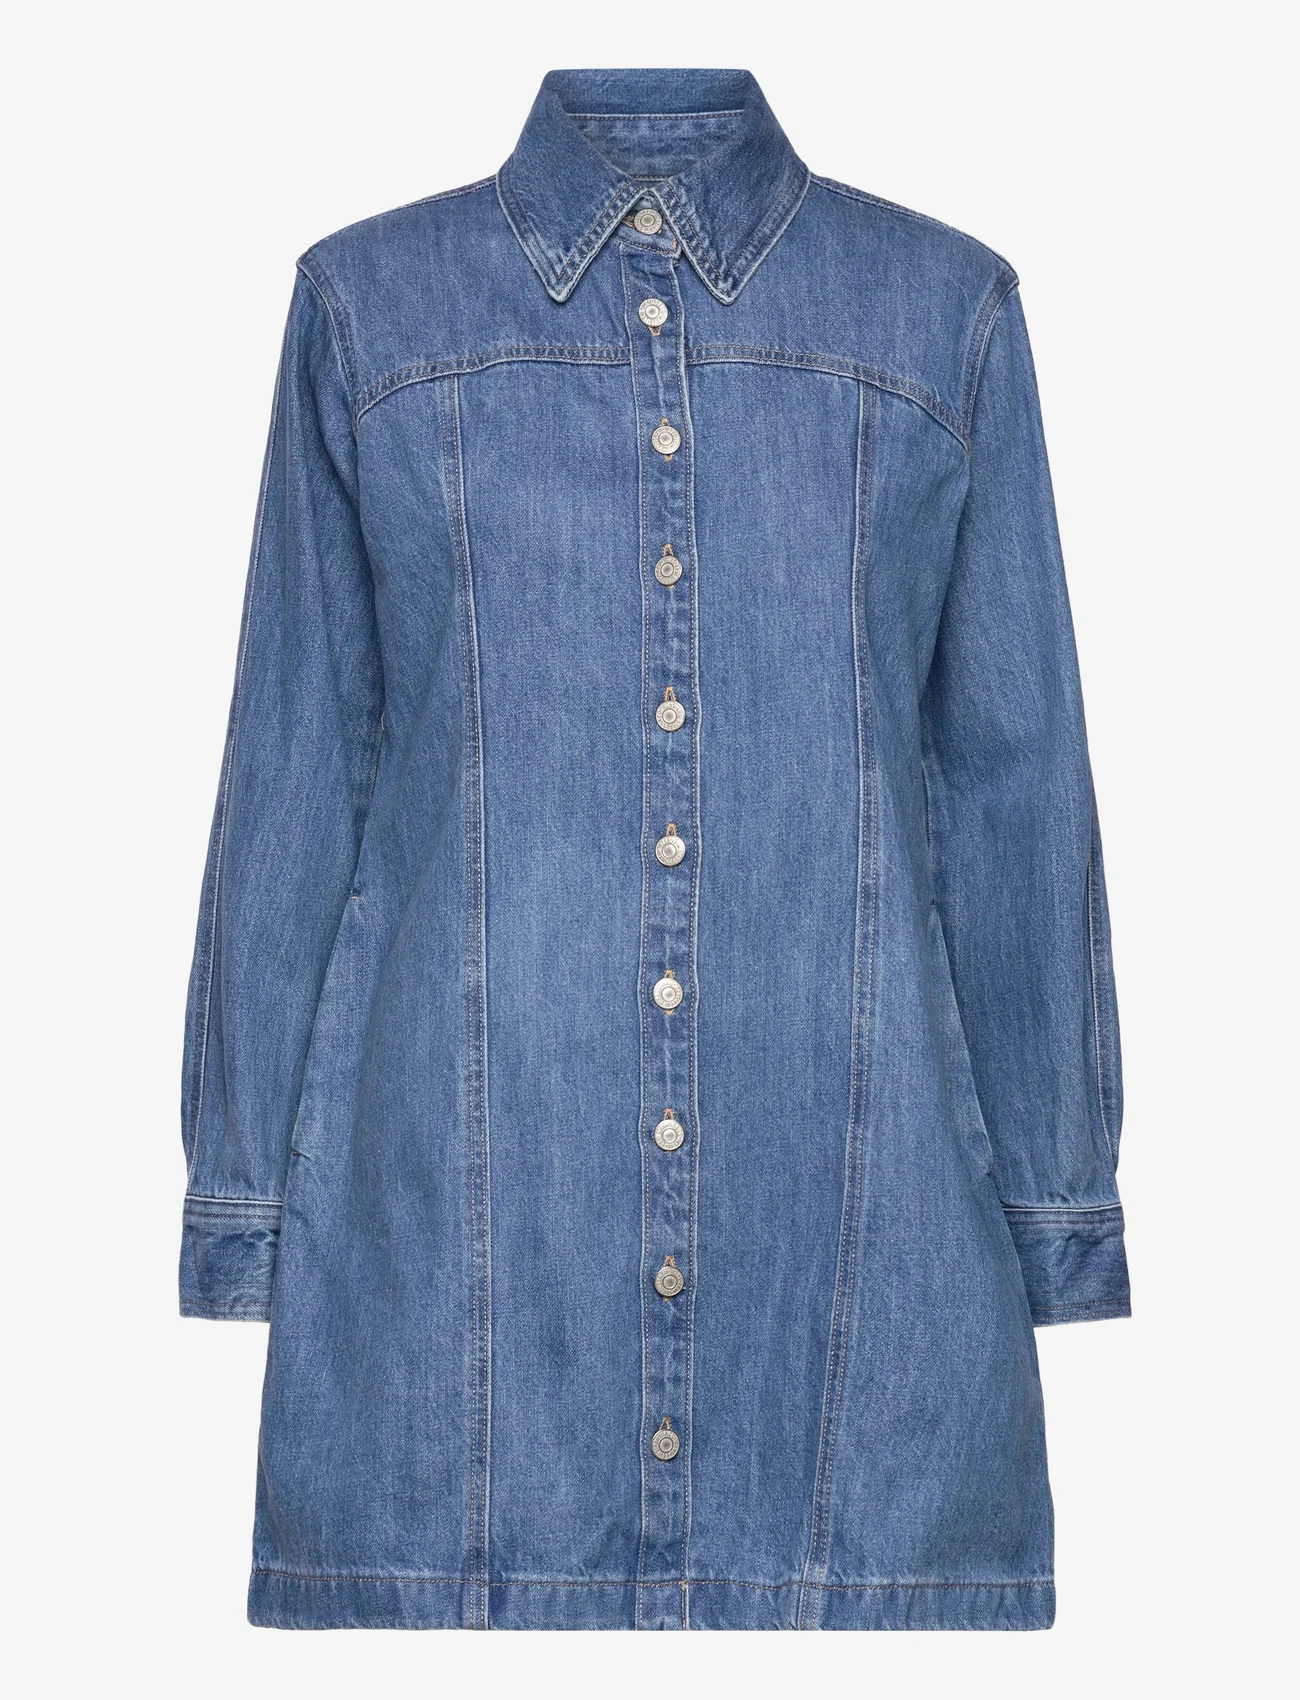 LEVI´S Women - SHAY DENIM DRESS OLD 517 BLUE - denimkjoler - light indigo - worn in - 0